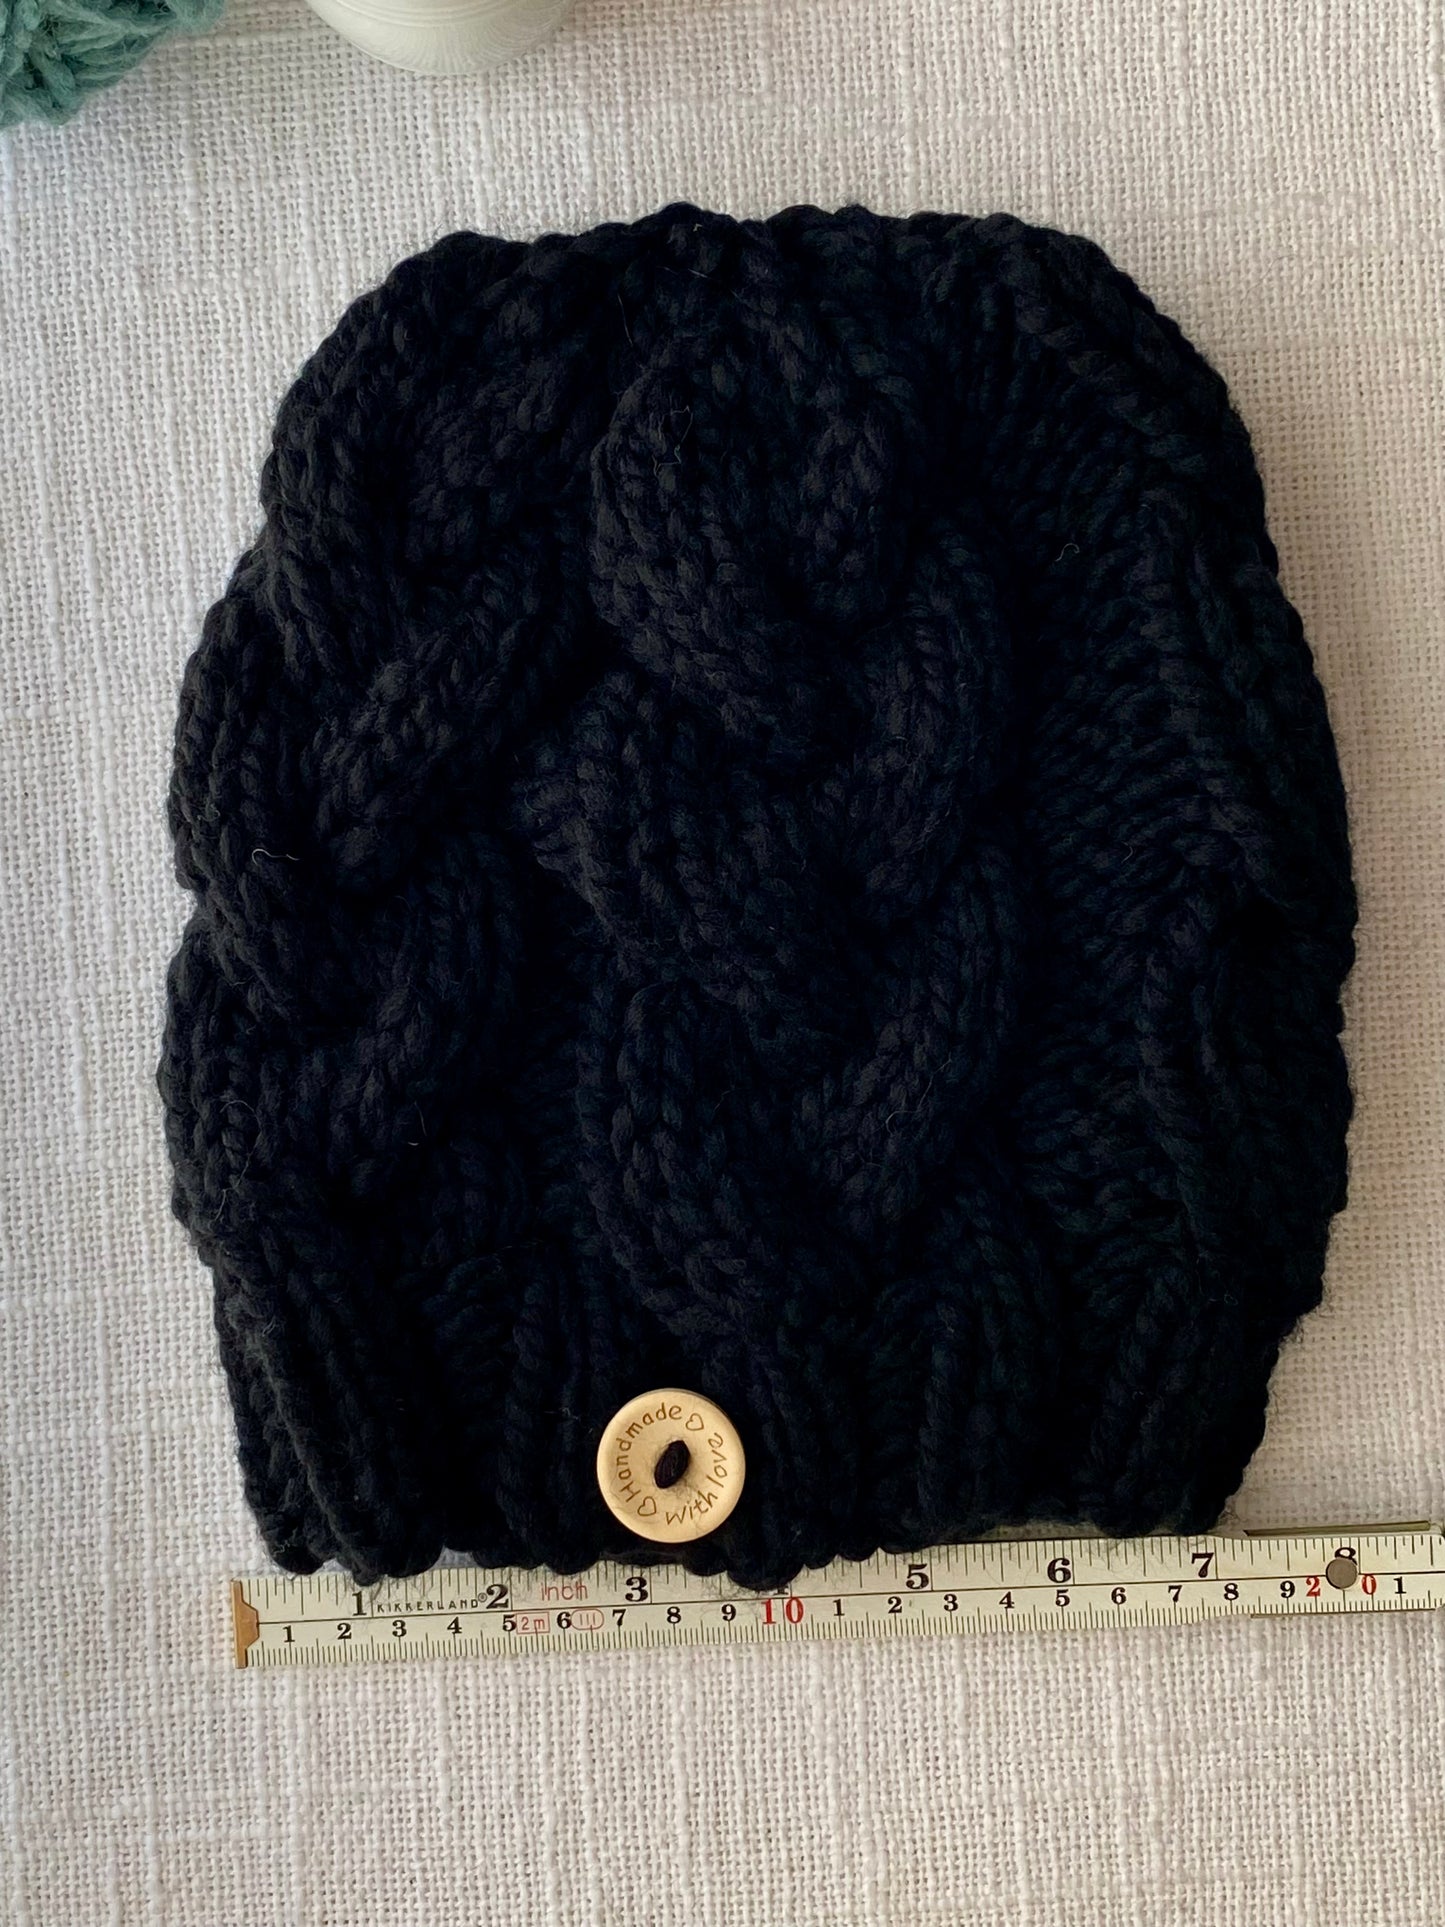 Cozy Cables Hat - Wool Blend Fiber in Raven